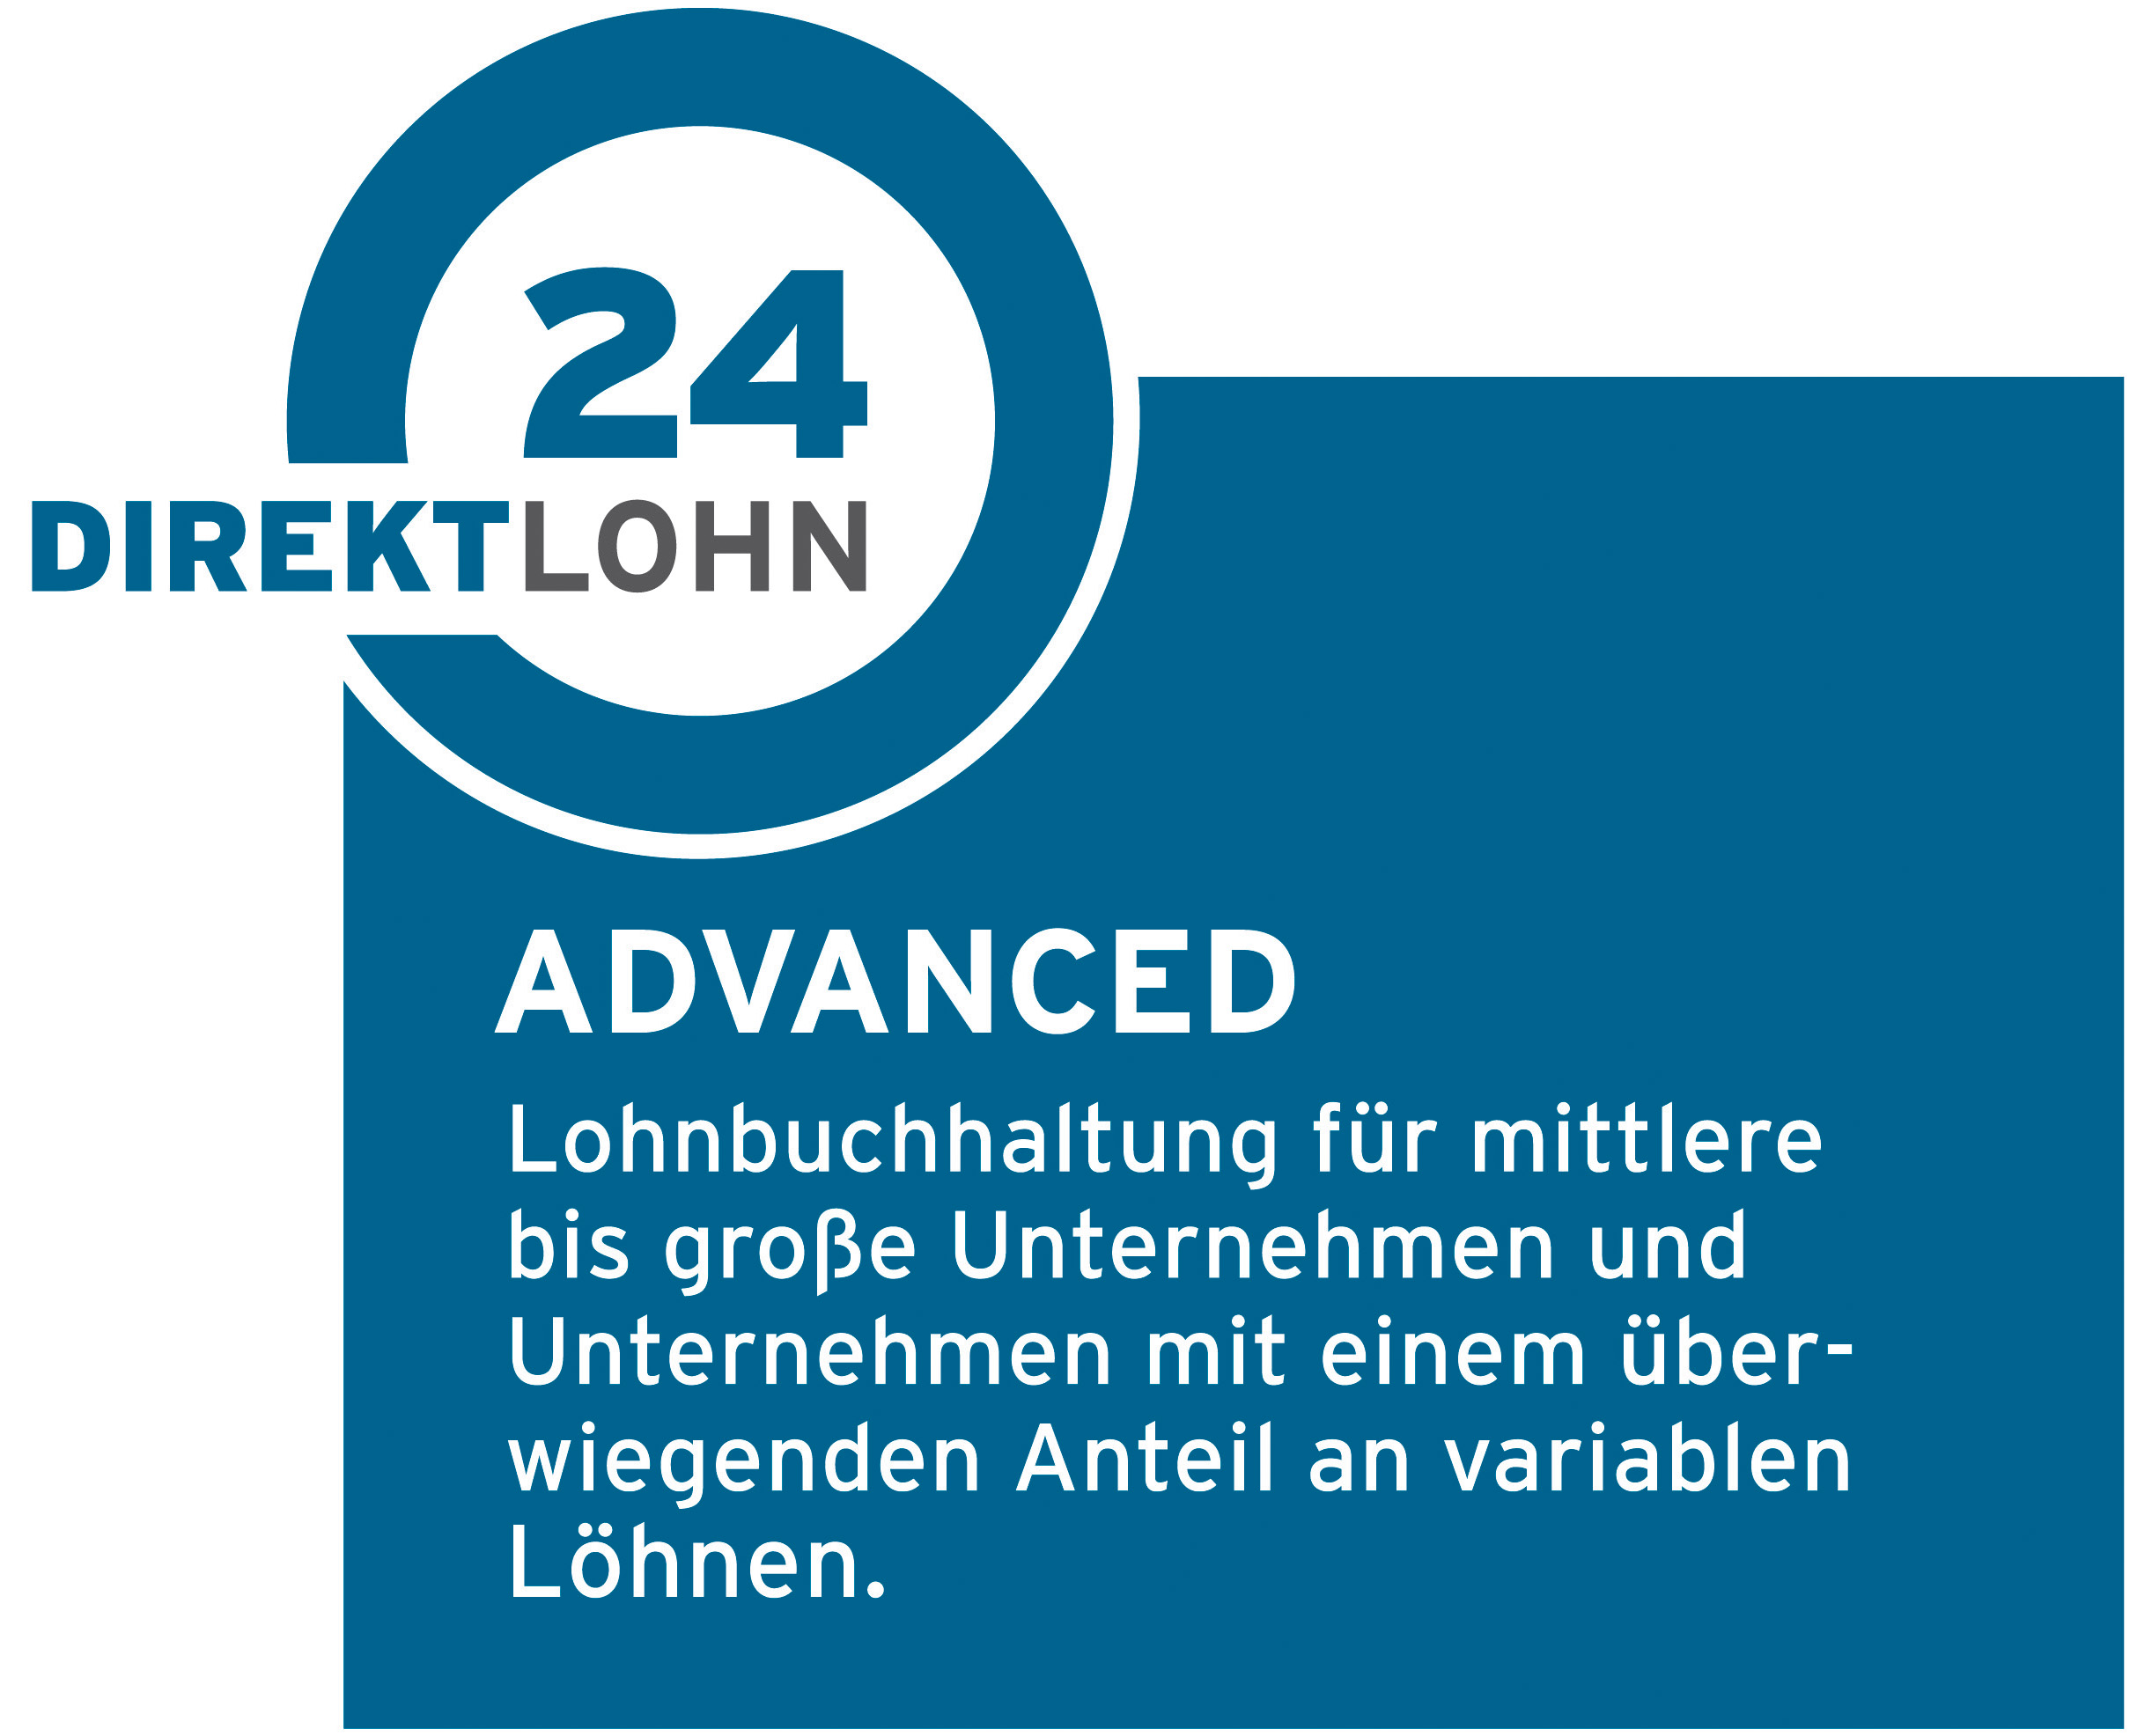 Direktlohn24.de Lohnbuchhaltung Advanced